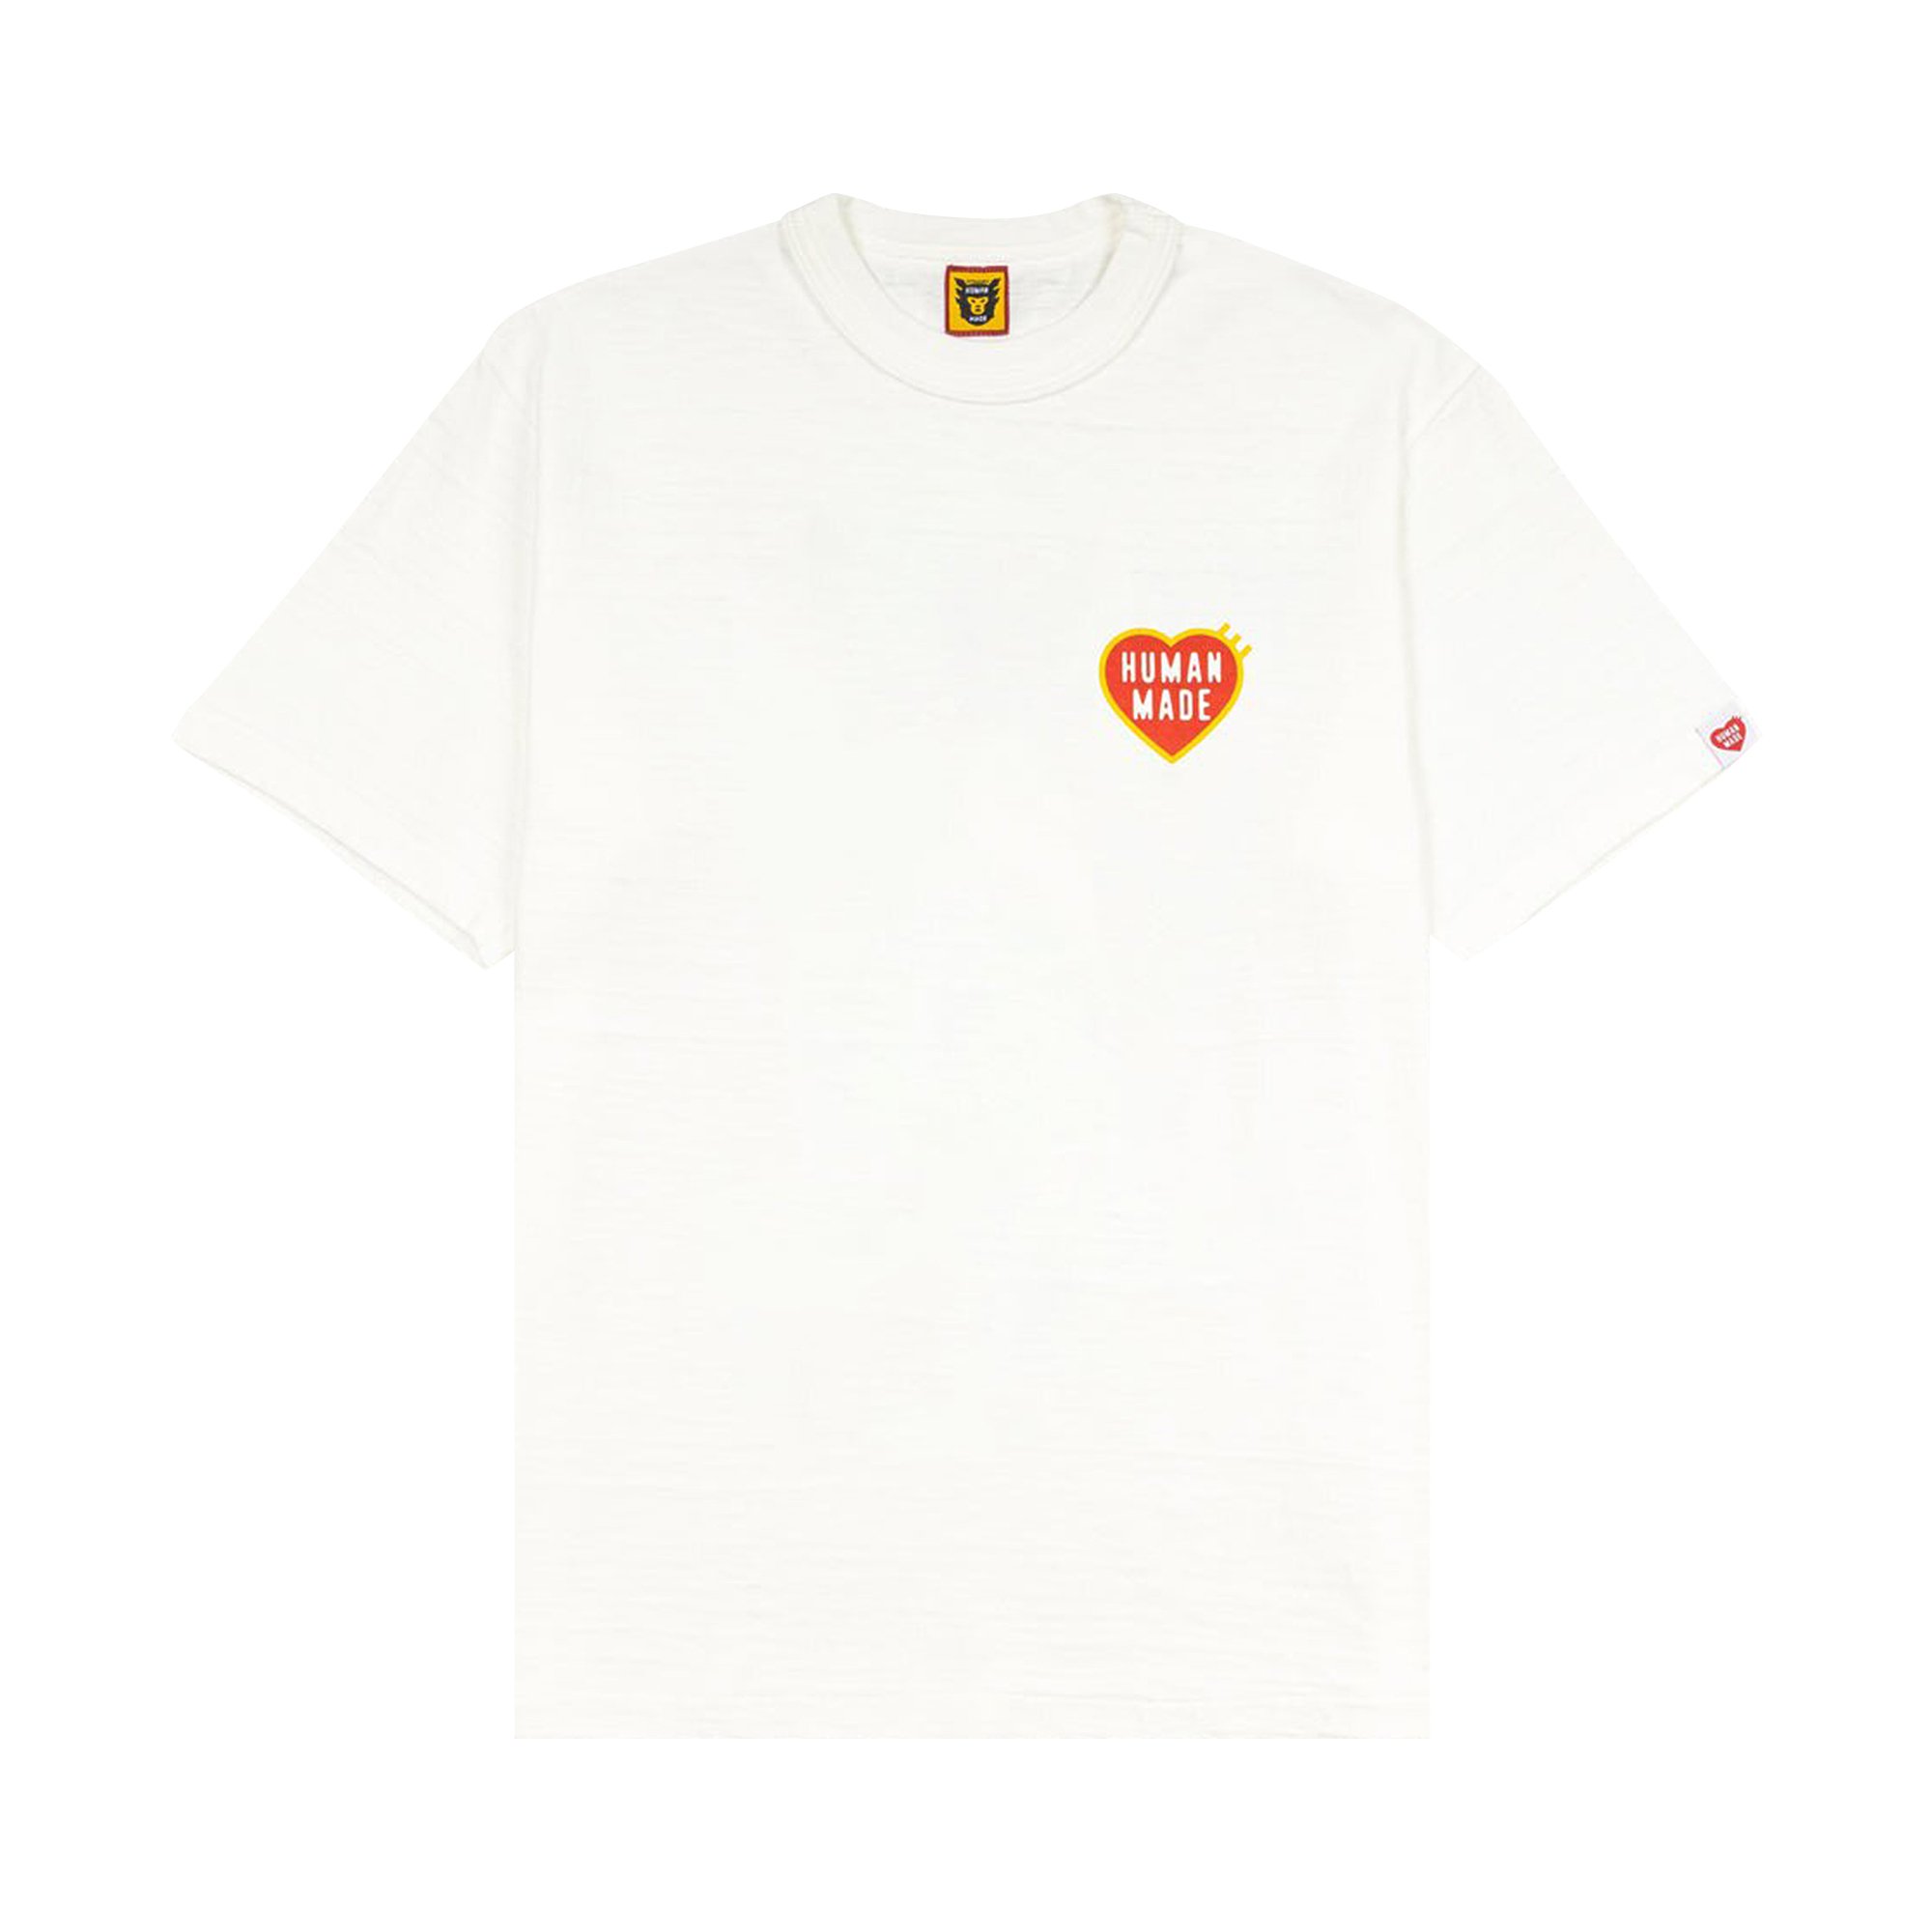 Buy Human Made Graphic T-Shirt #11 'White' - HM26TE011 WHIT | GOAT